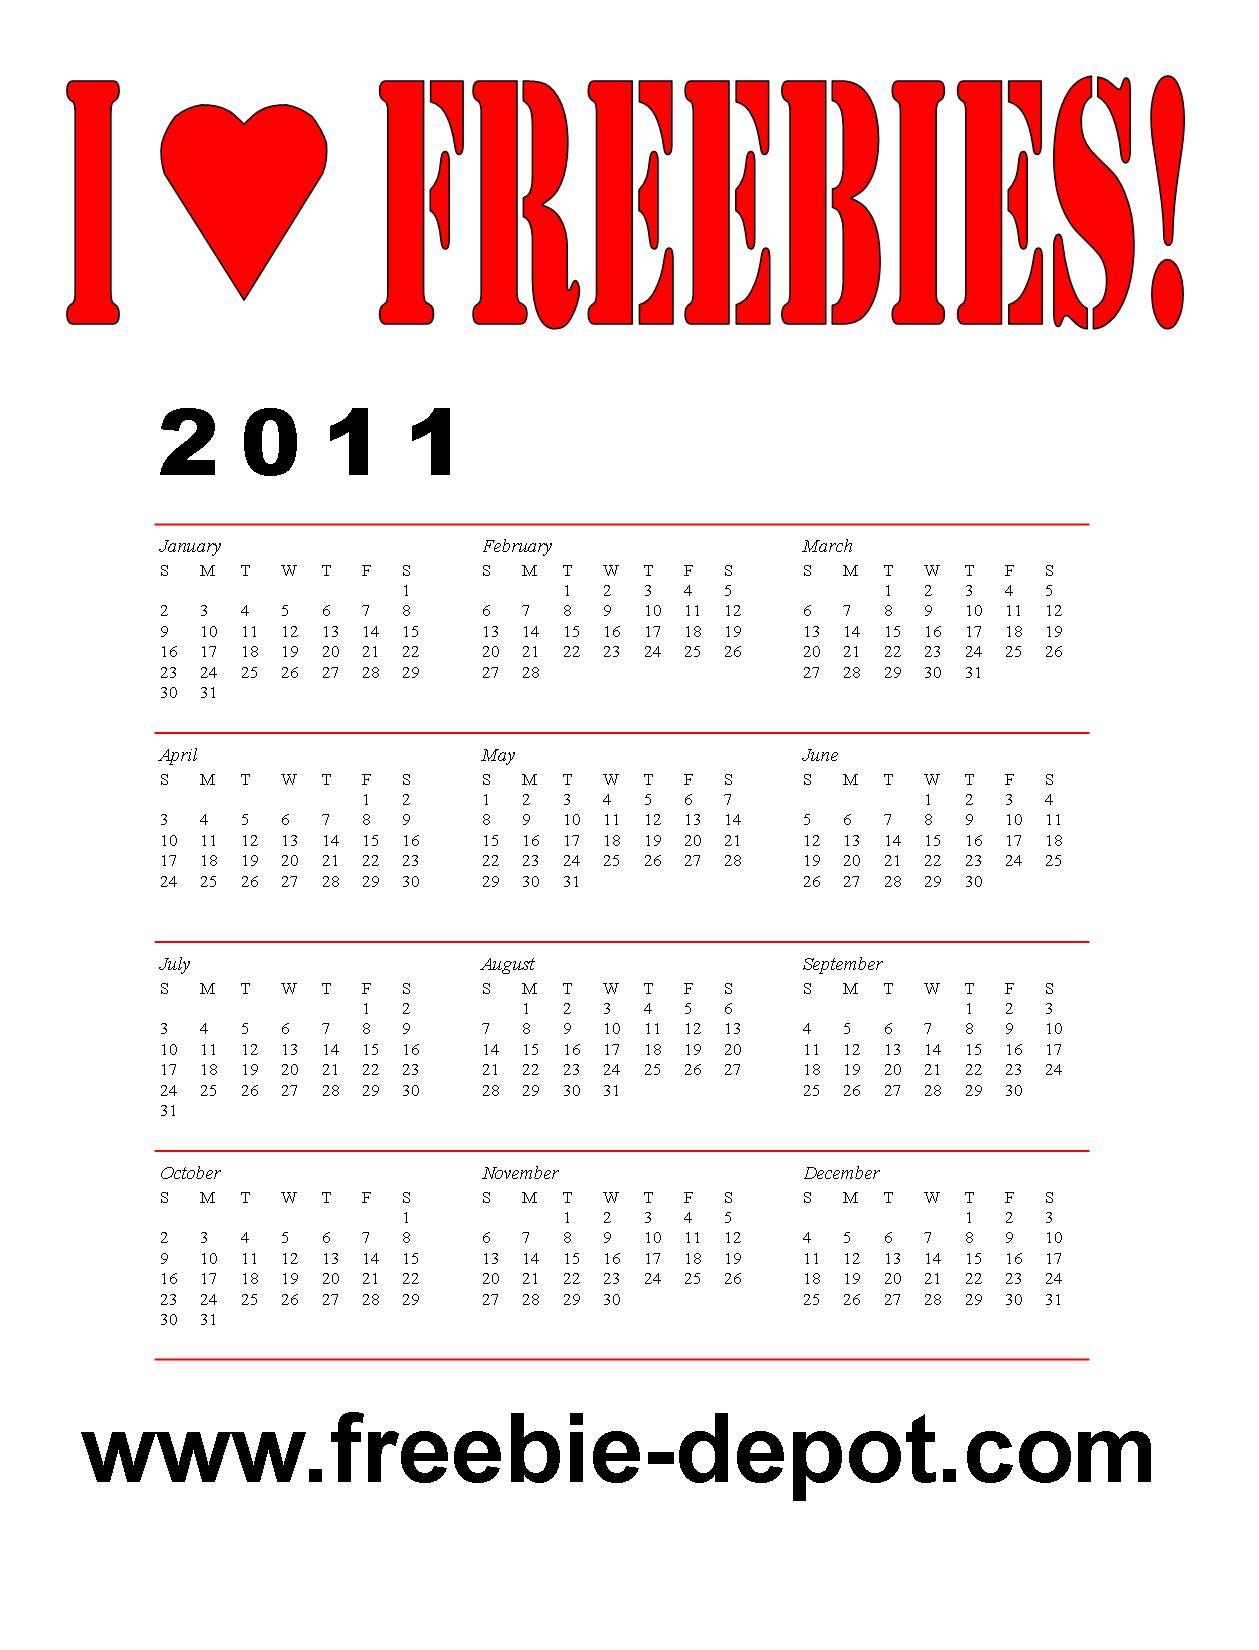 FREE 2011 Calendars